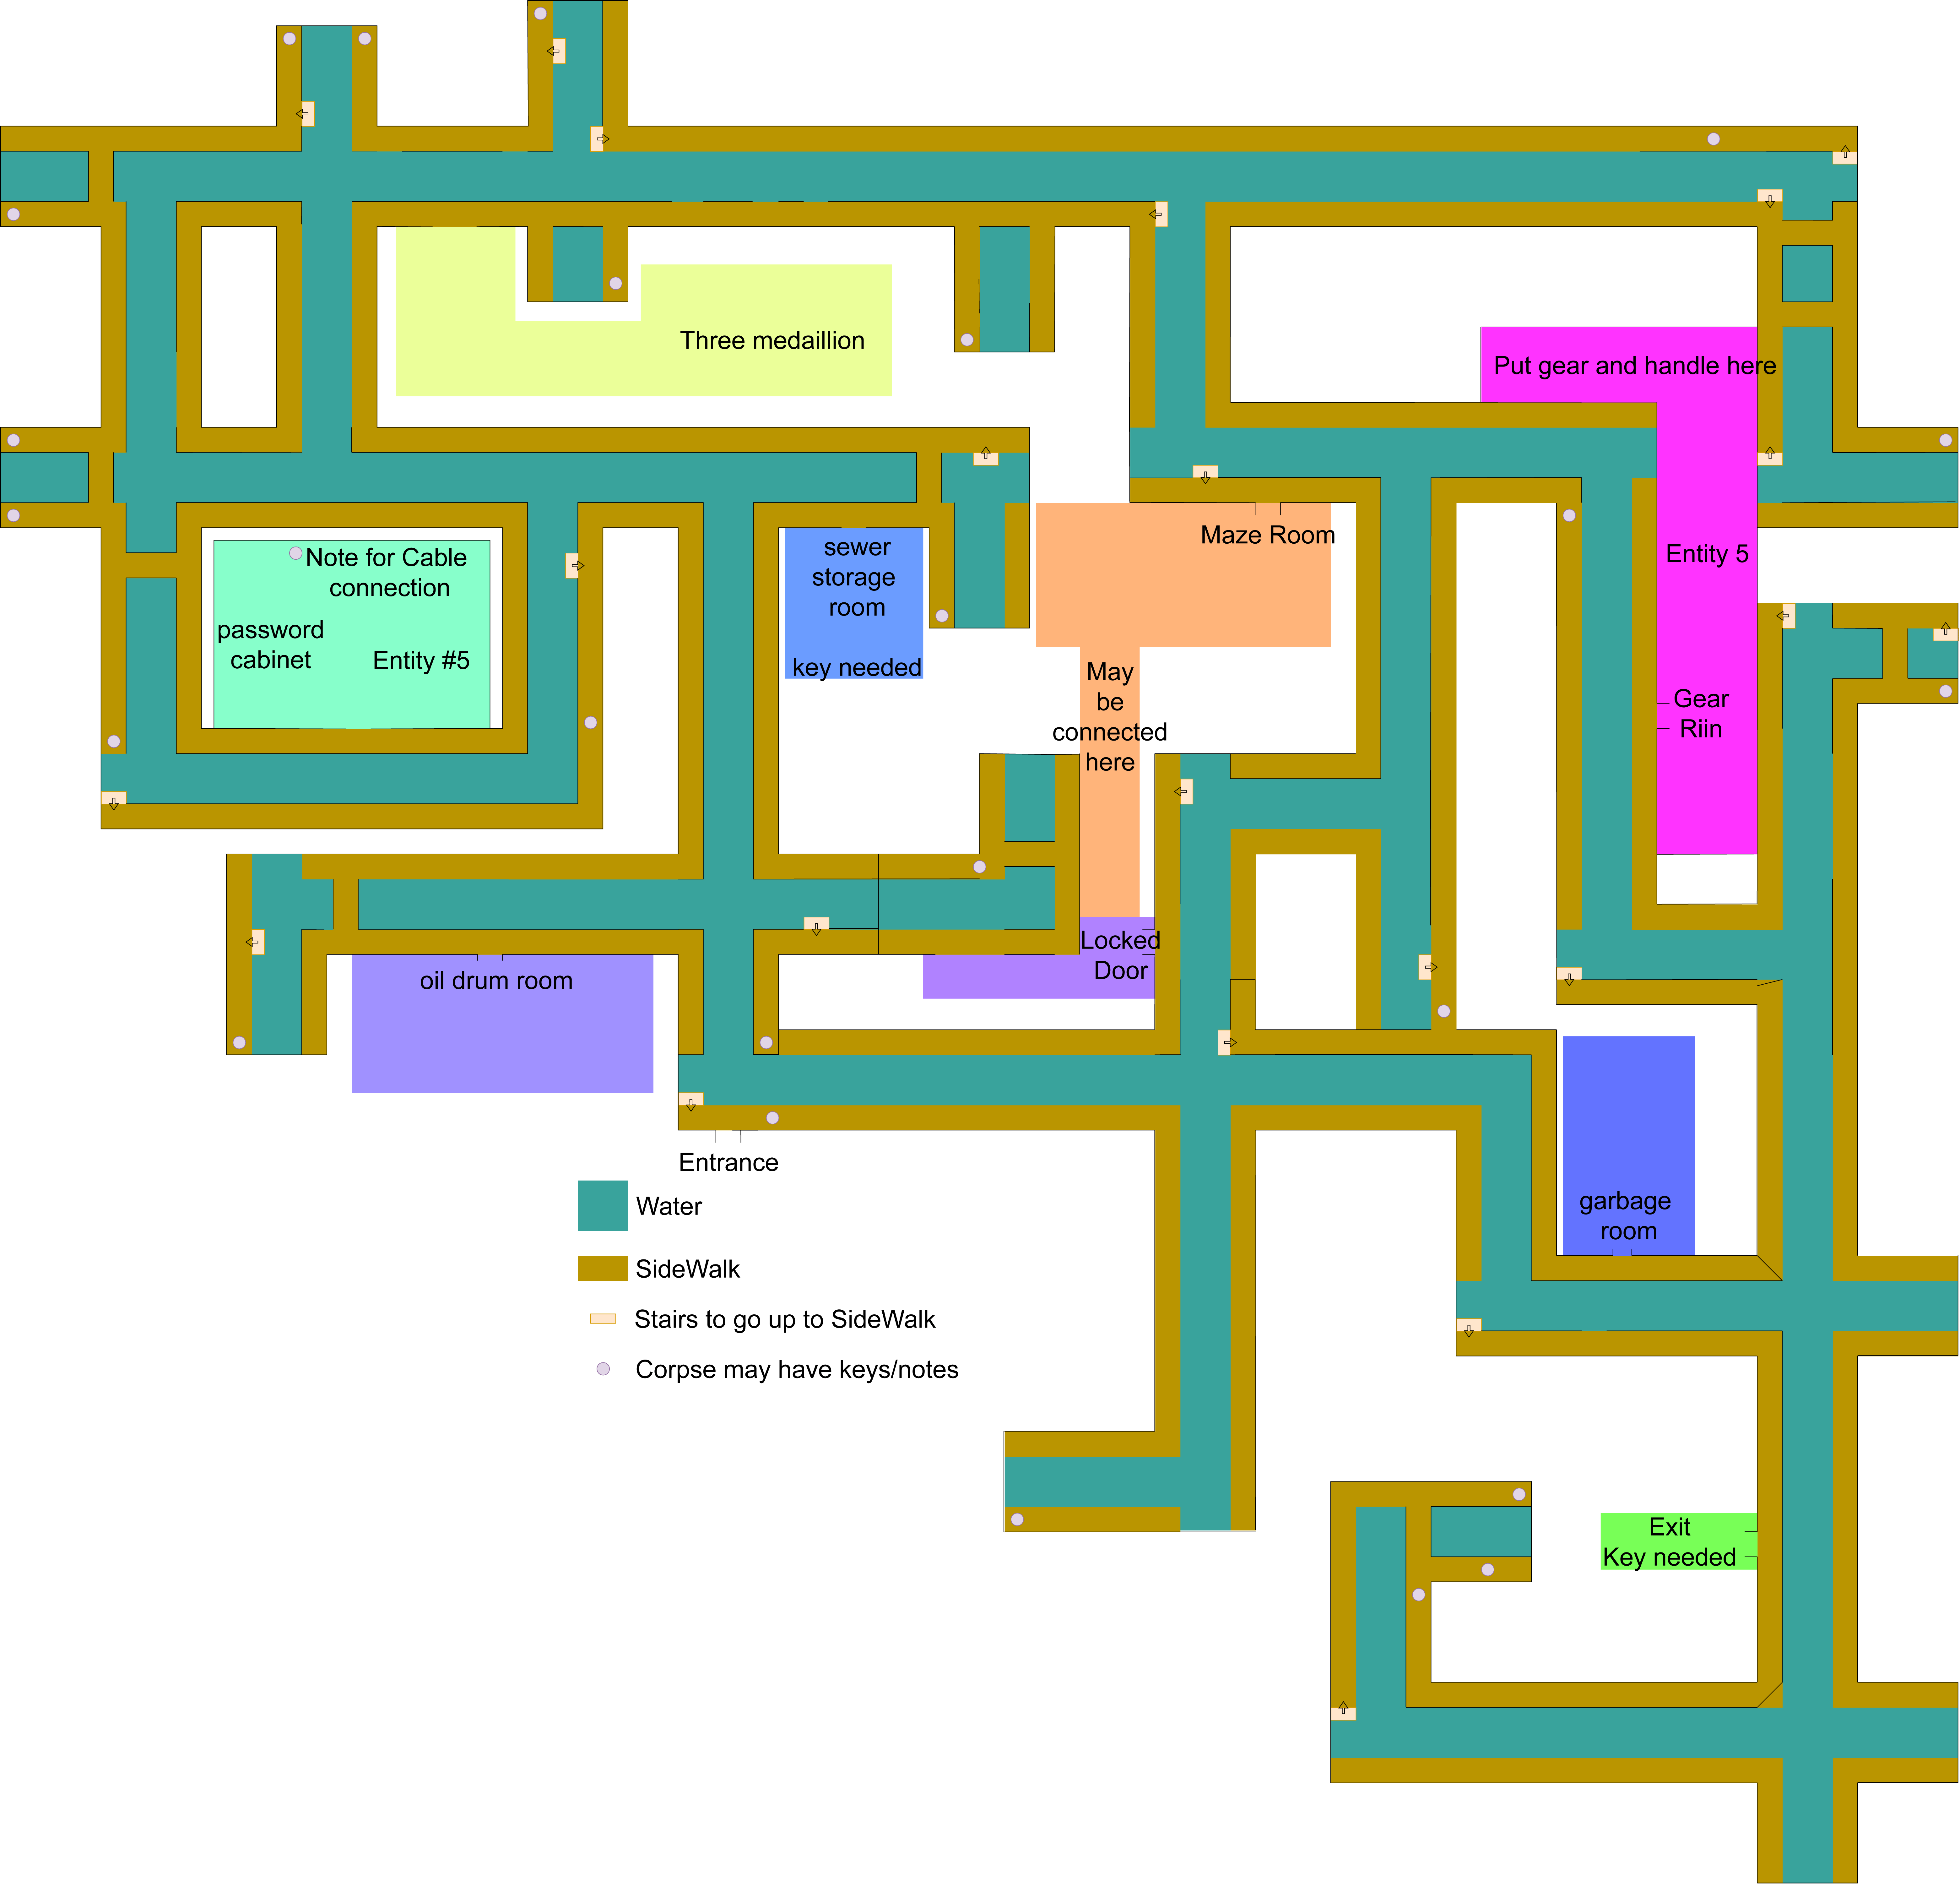 Backrooms Levels 0-9 Exit Map (Remastered) : r/TheBackrooms